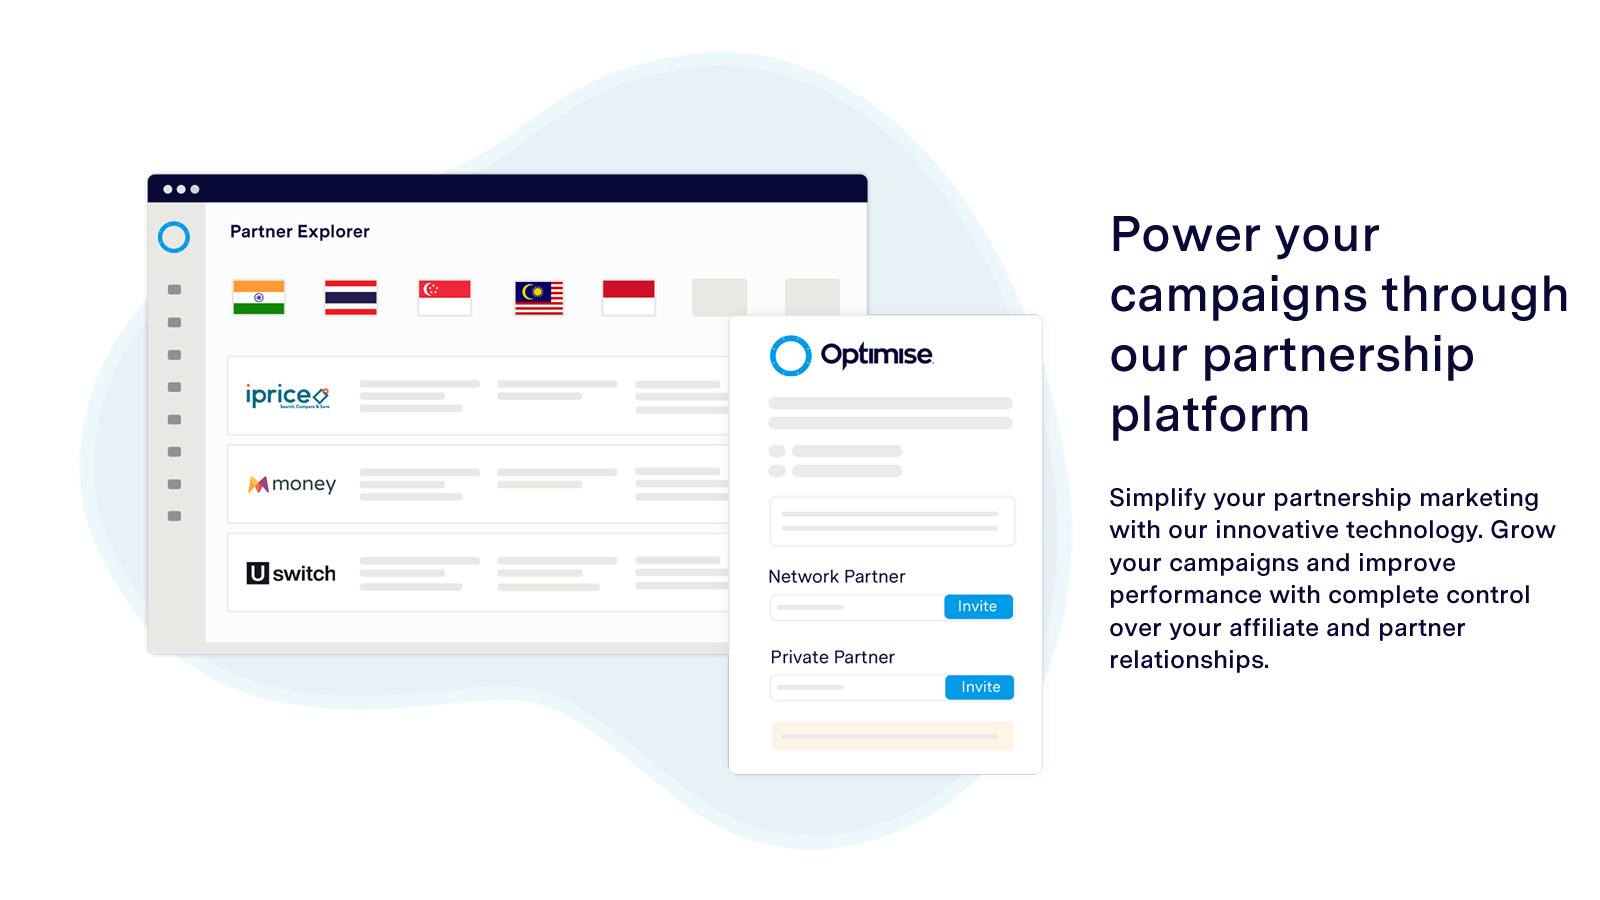 Power your campaigns through our partnership platform